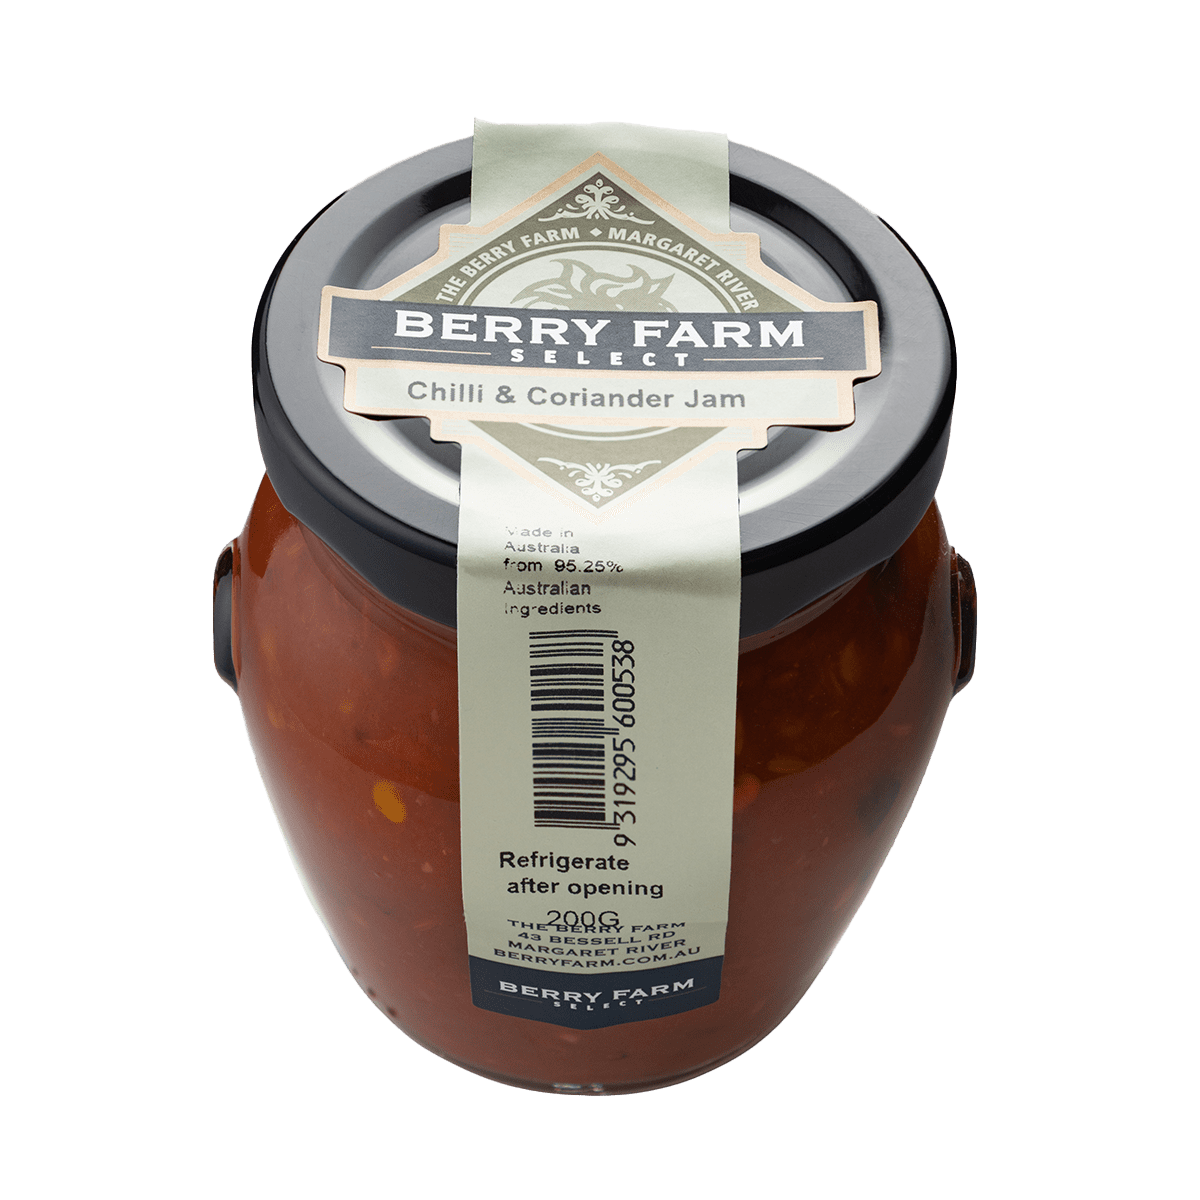 A jar of Chilli & Coriander Jam